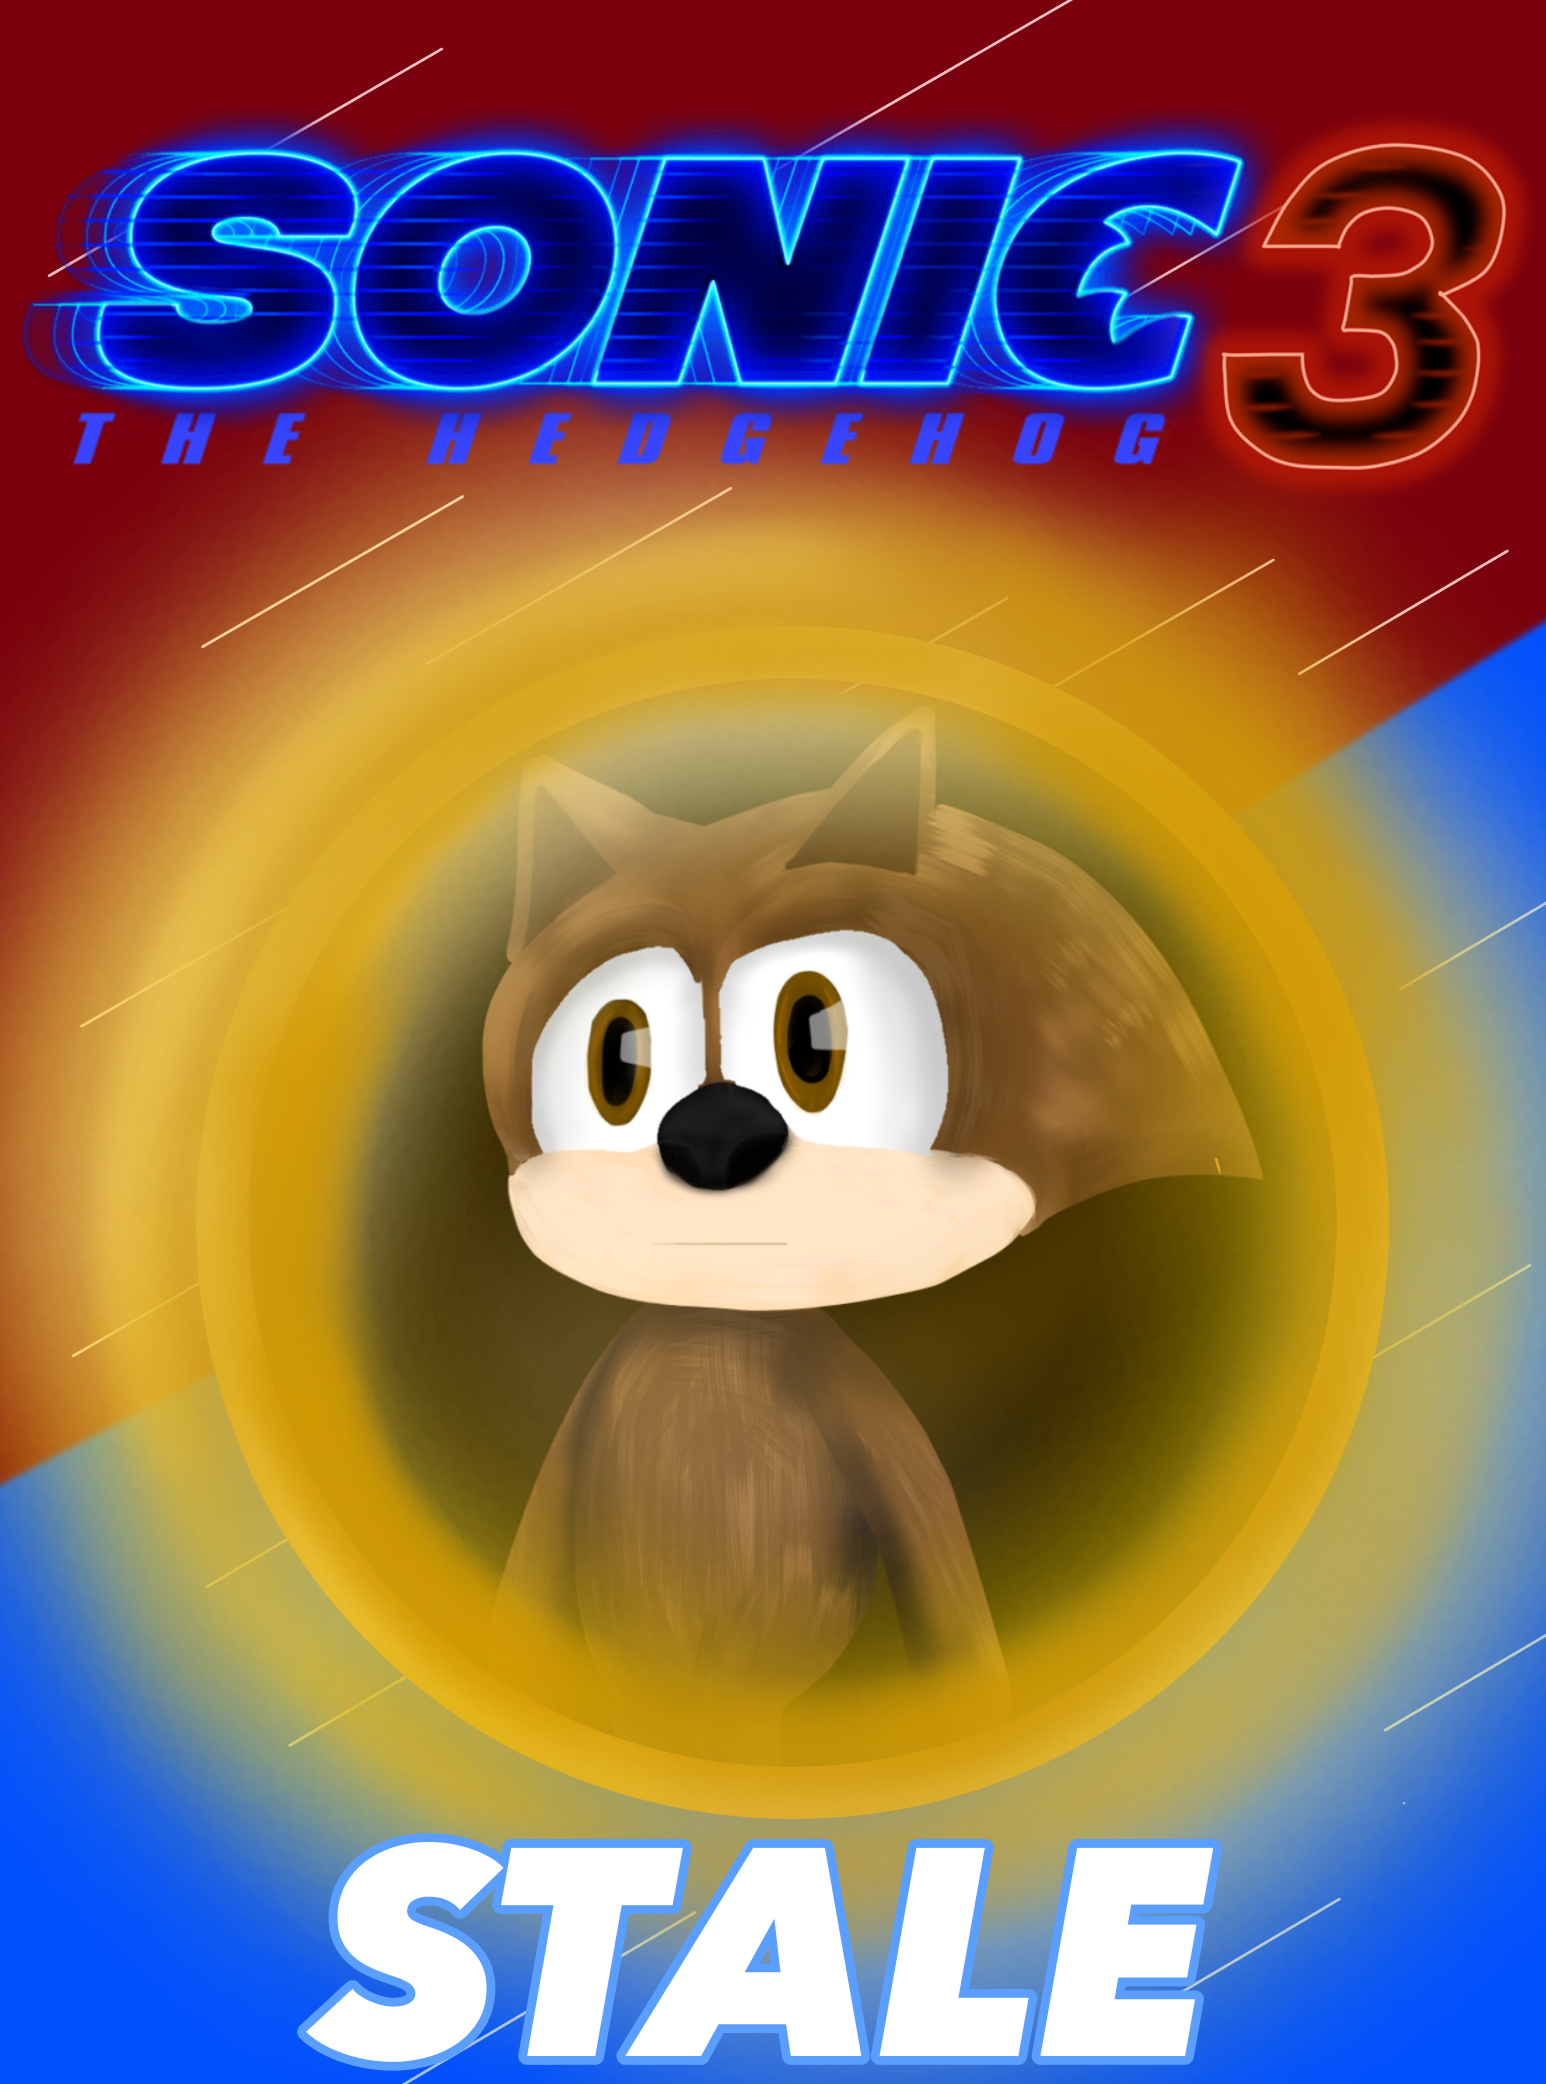 Sonic the Hedgehog 3 film set photos leak